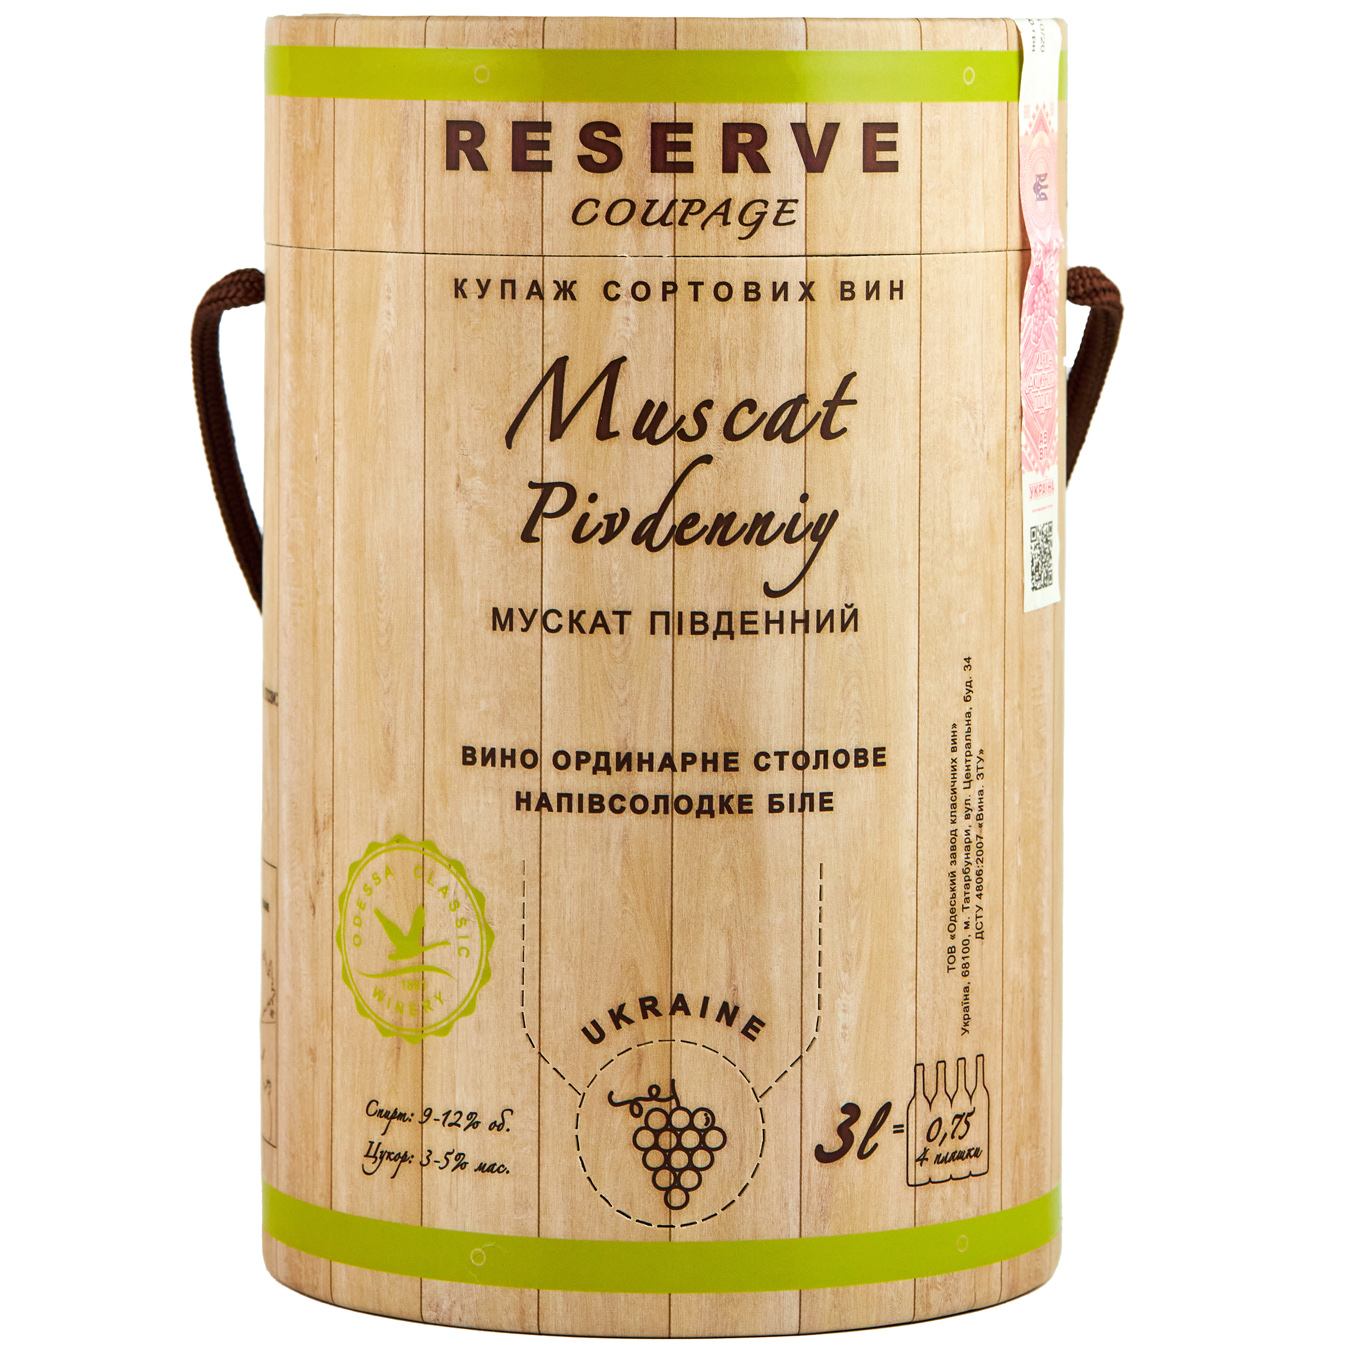 Reserve Coupage Muscat Pivdenniy white semi-sweet wine 9-12% 3l